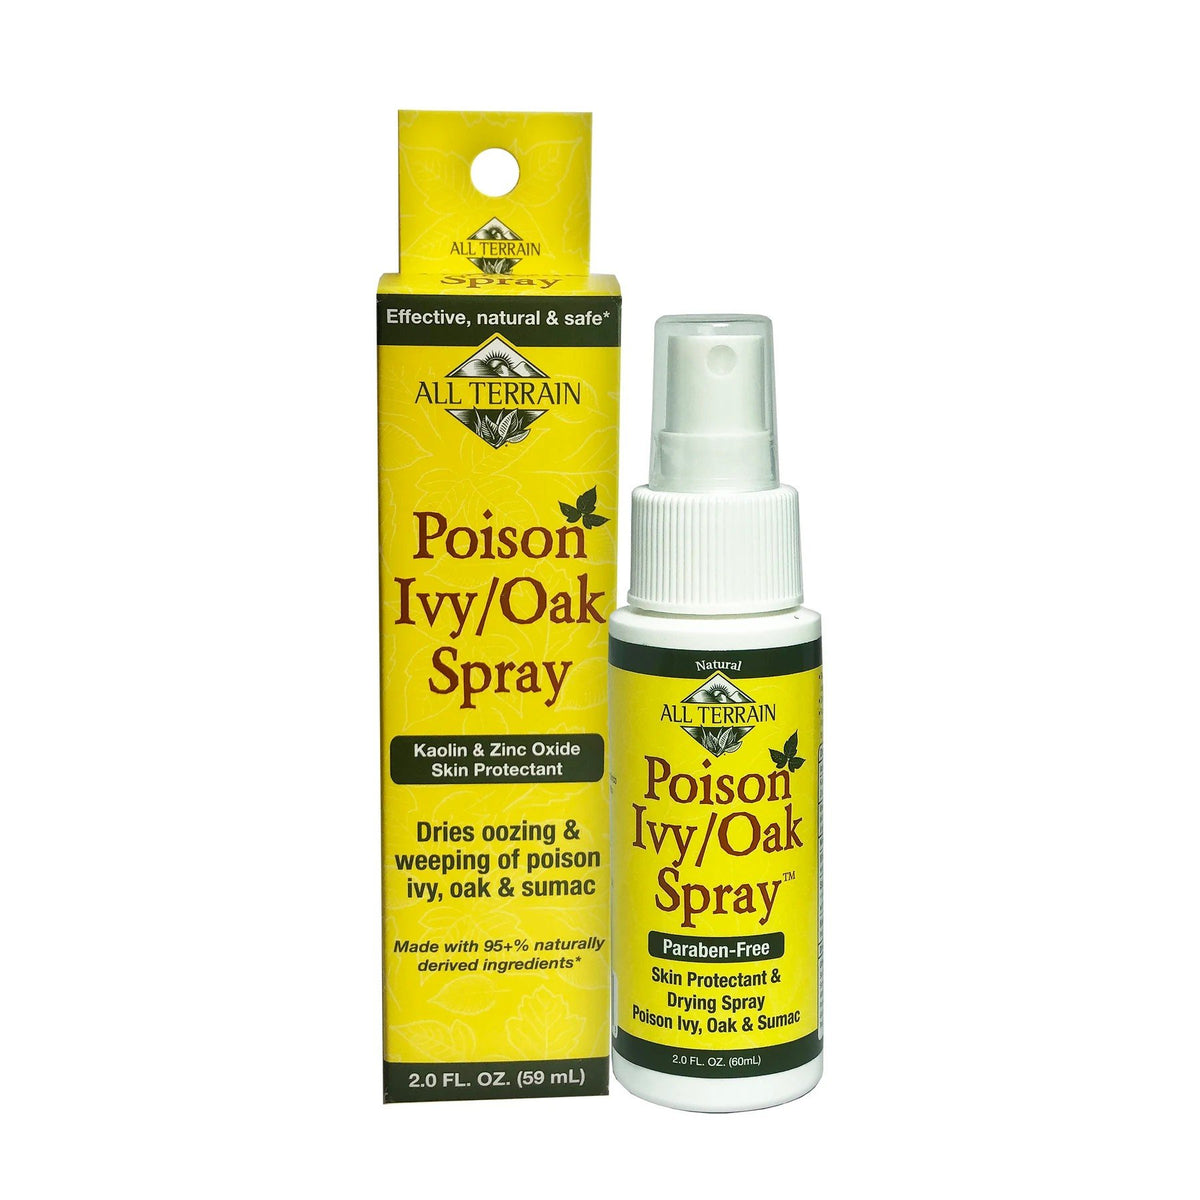 All Terrain Poison Ivy/Oak Spray 2 oz Spray